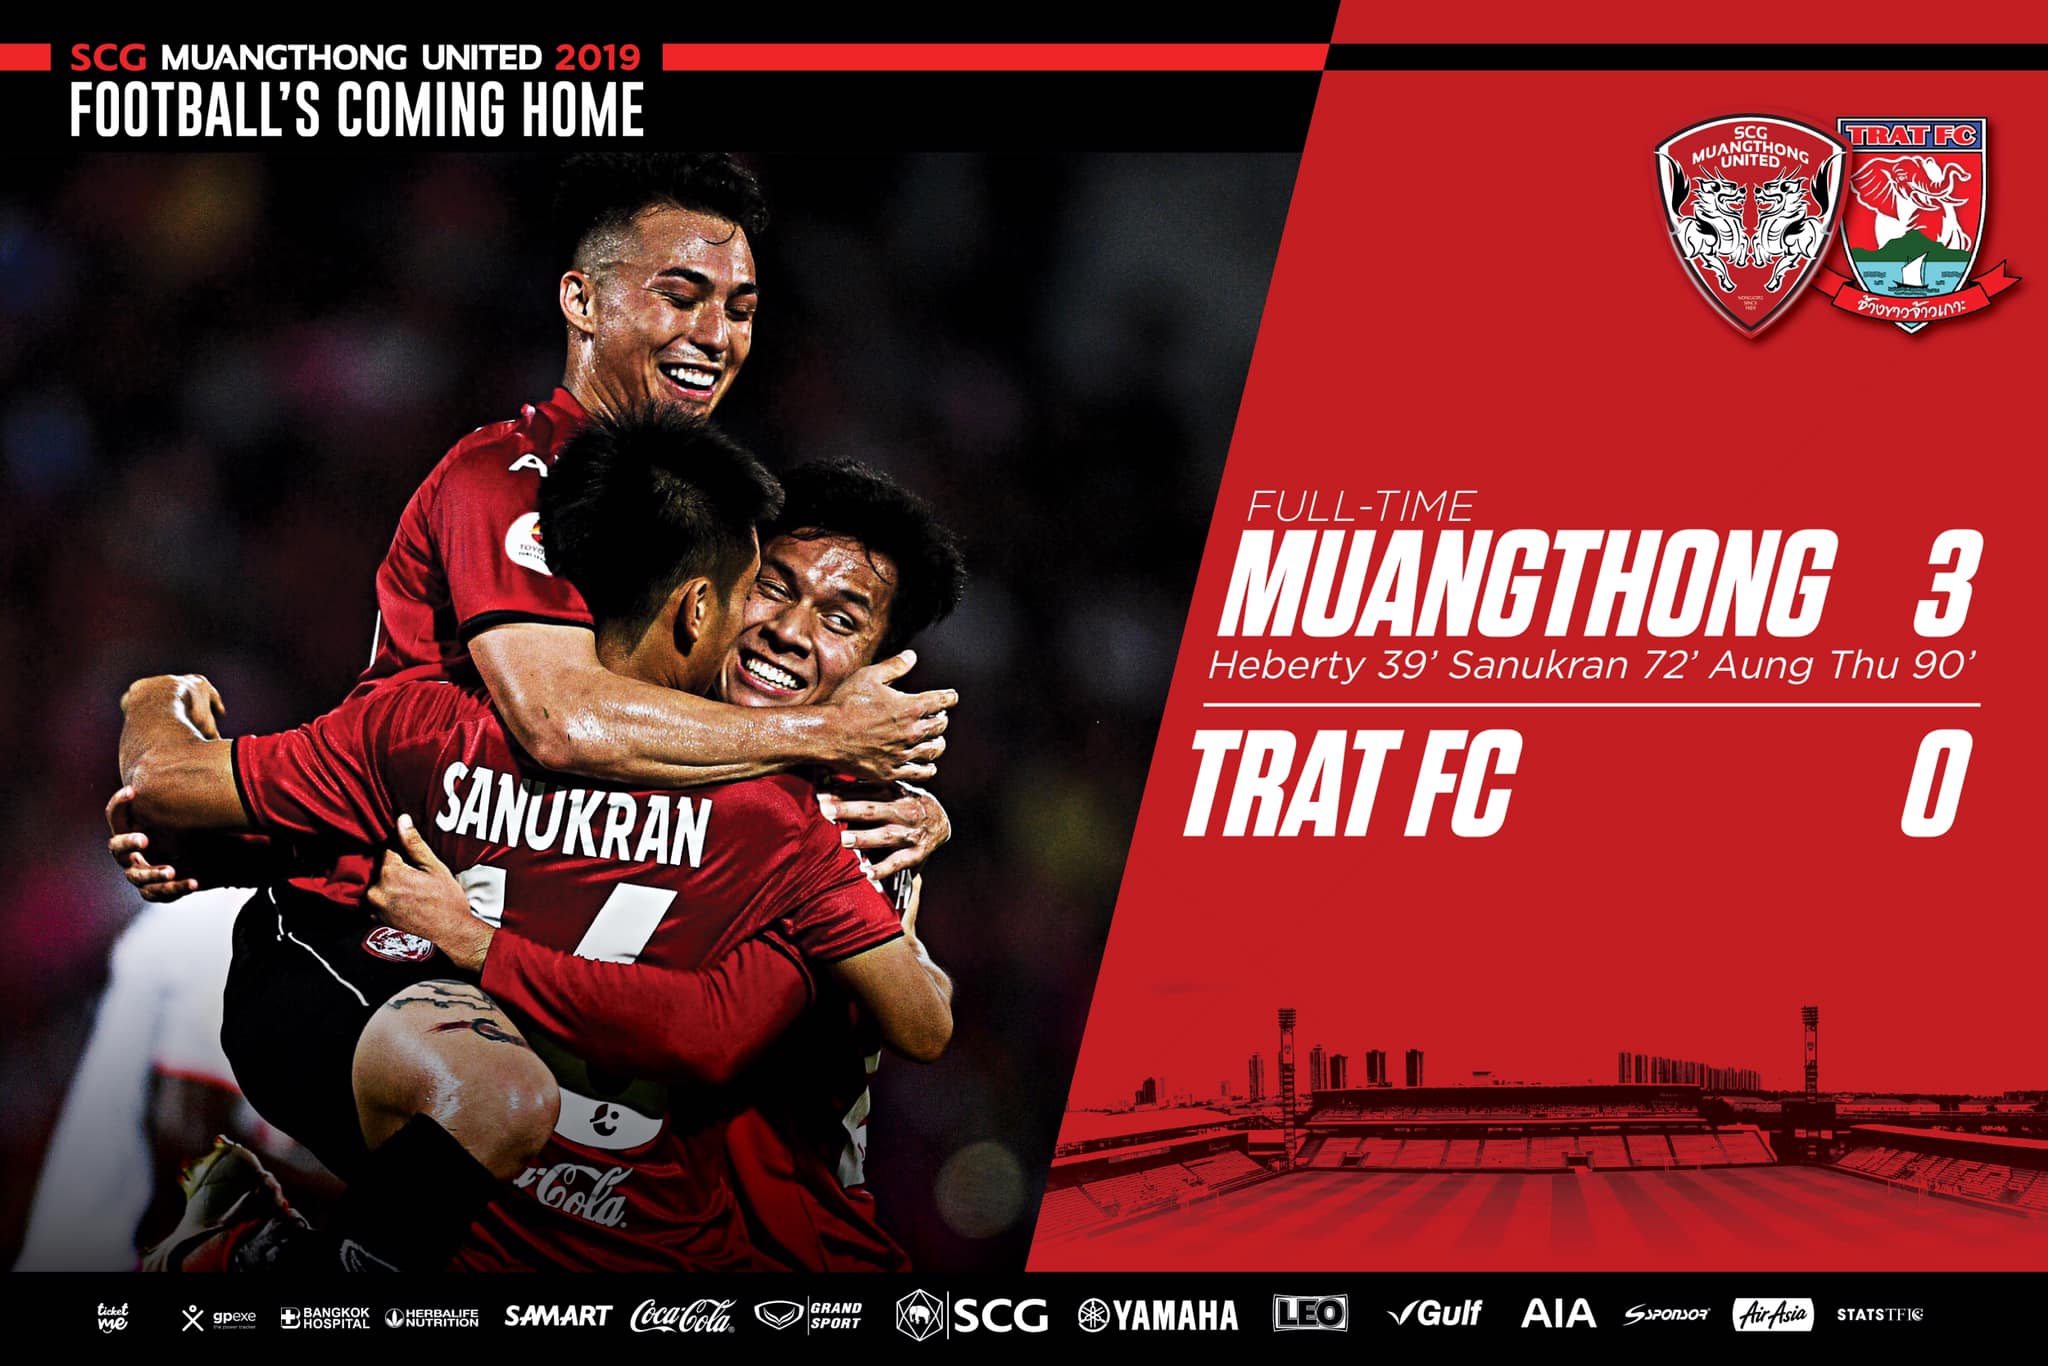 Kết quả Muangthong United vs Trat FC, Muangthong United vs Trat FC, trực tiếp muangthong vs trat, vòng 15 thai league 2019